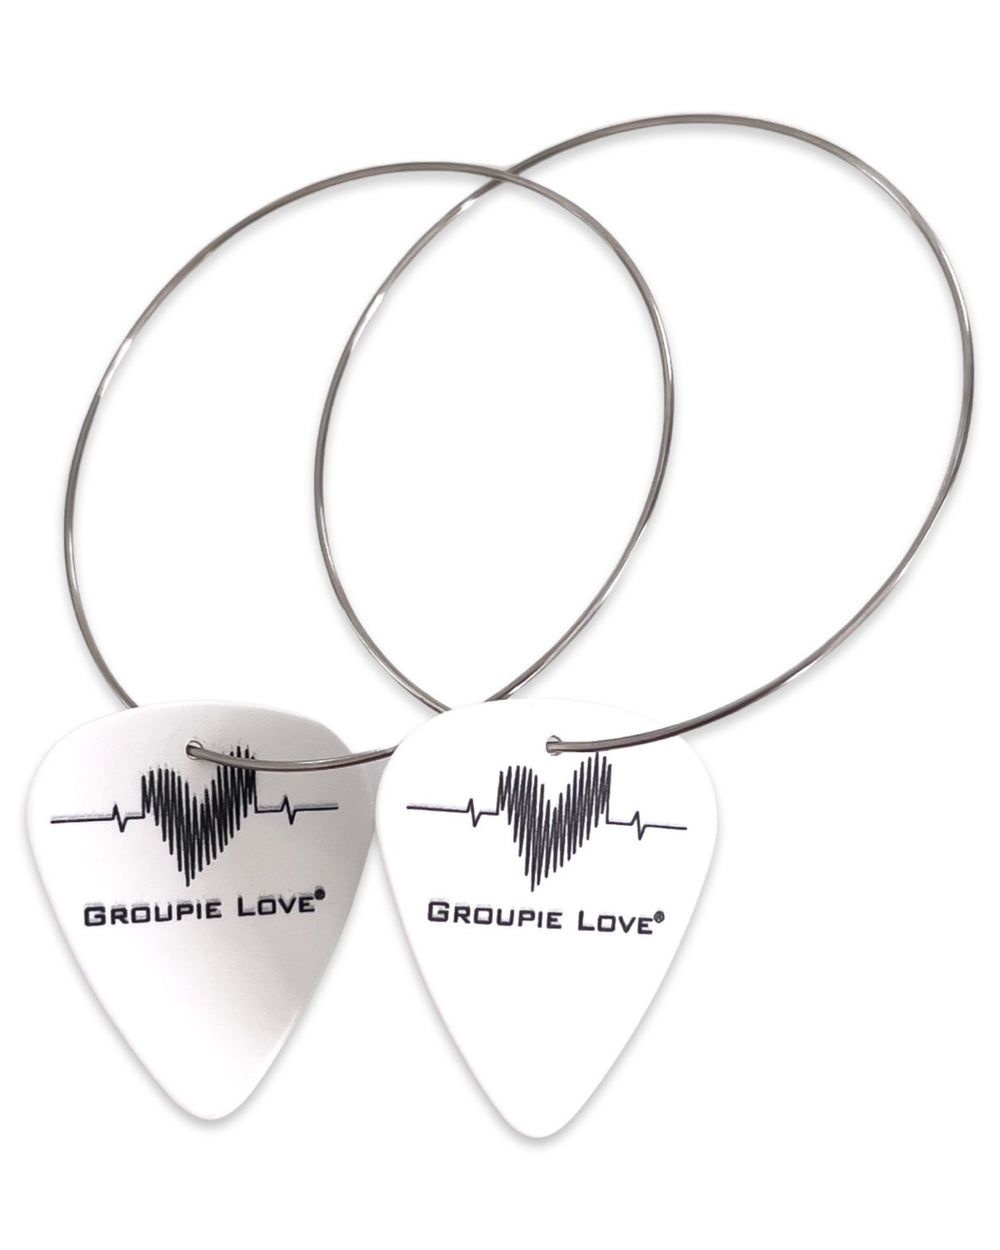 WS Groupie Love Classic Single Guitar Pick Earrings